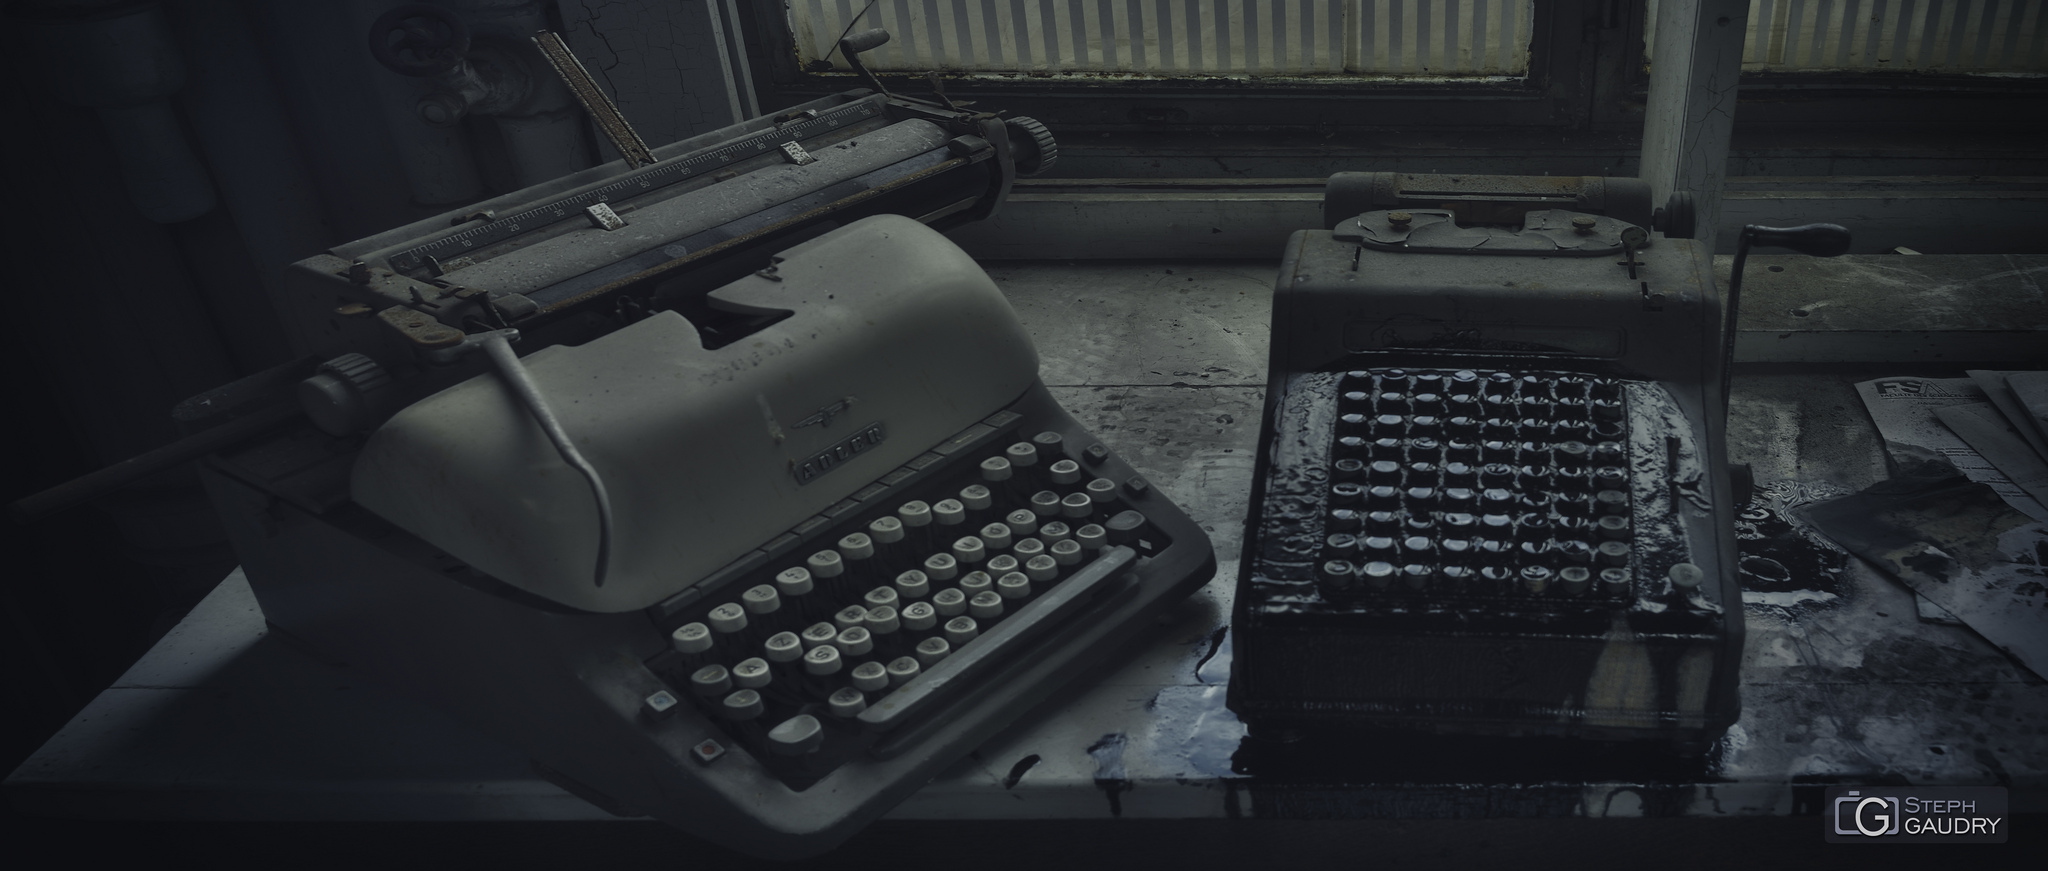 Adler typewriter [Klik om de diavoorstelling te starten]